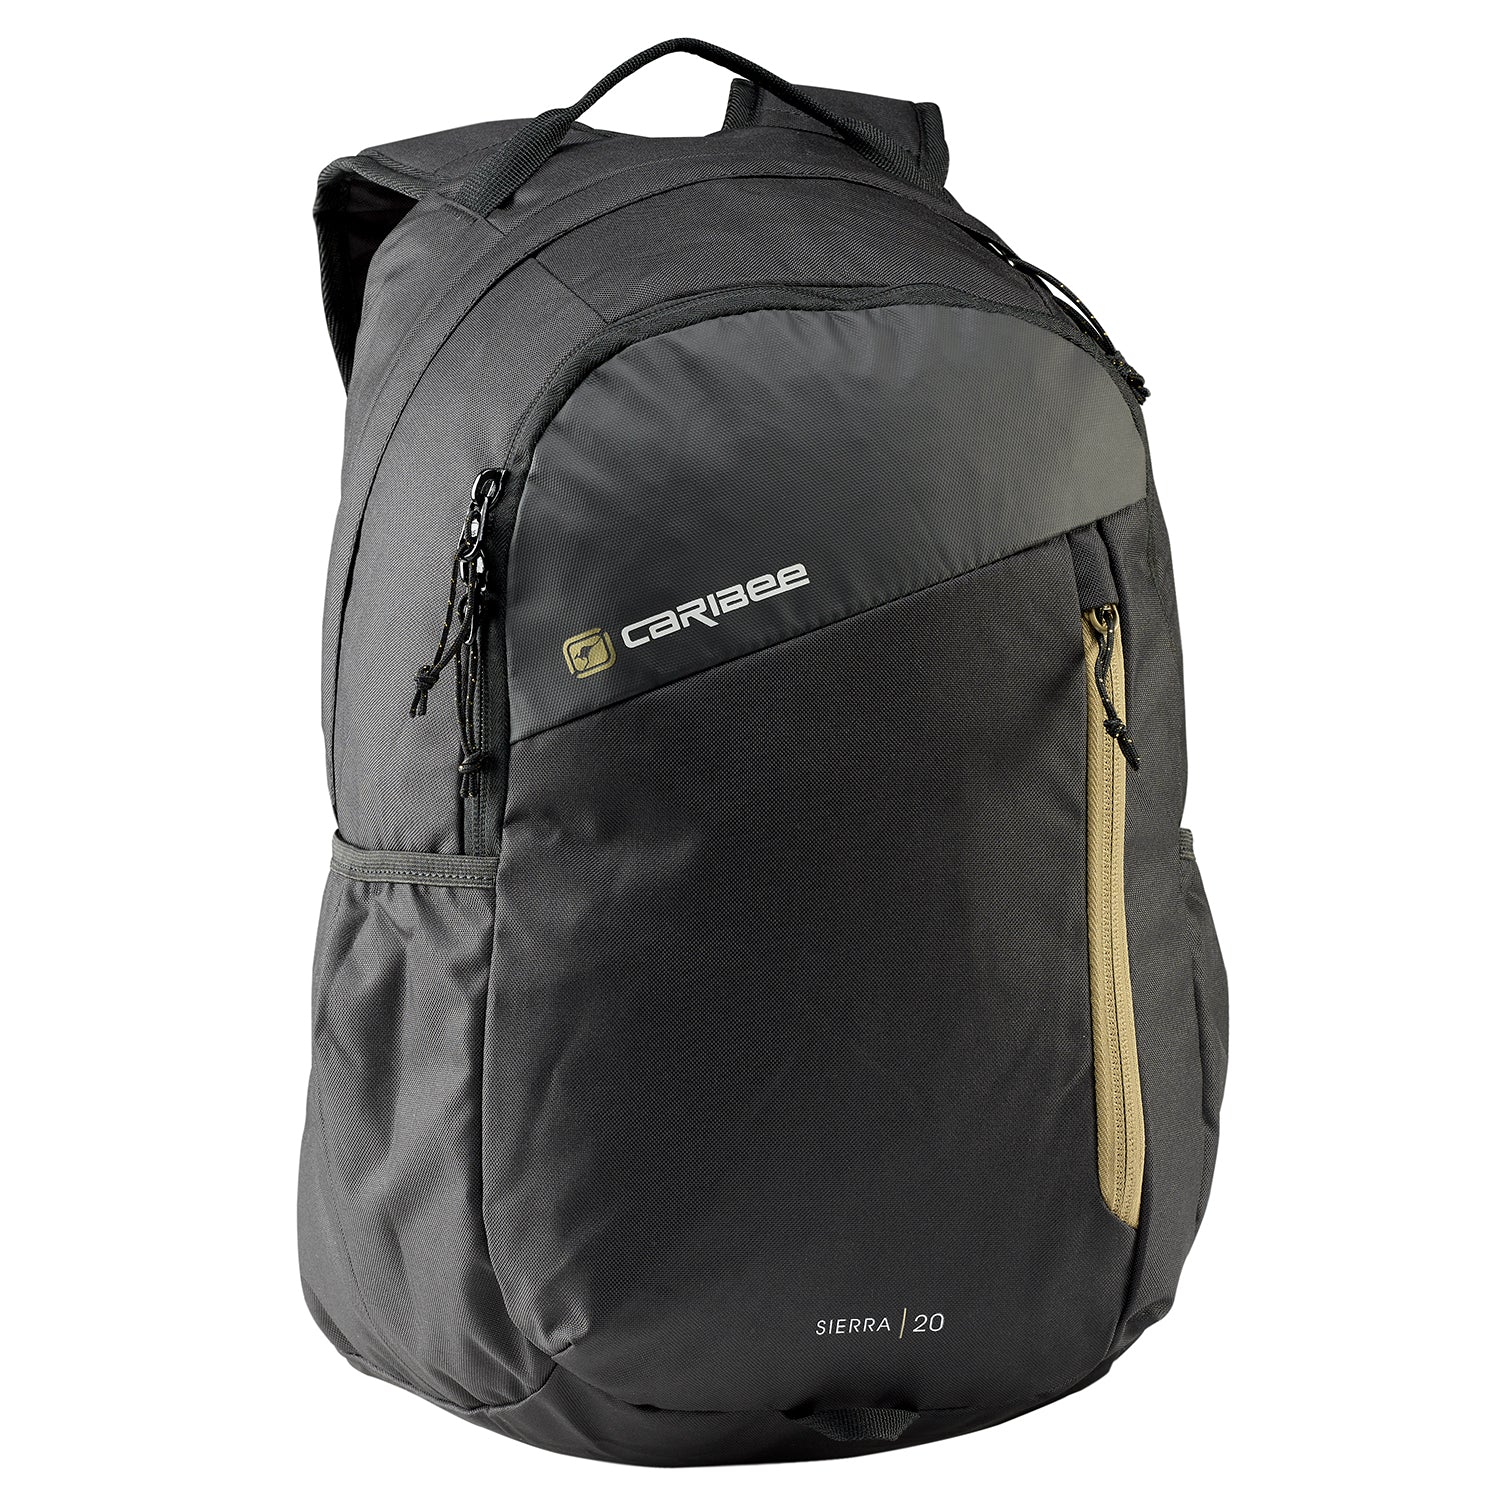 Caribee Sierra 20L backpack - Black